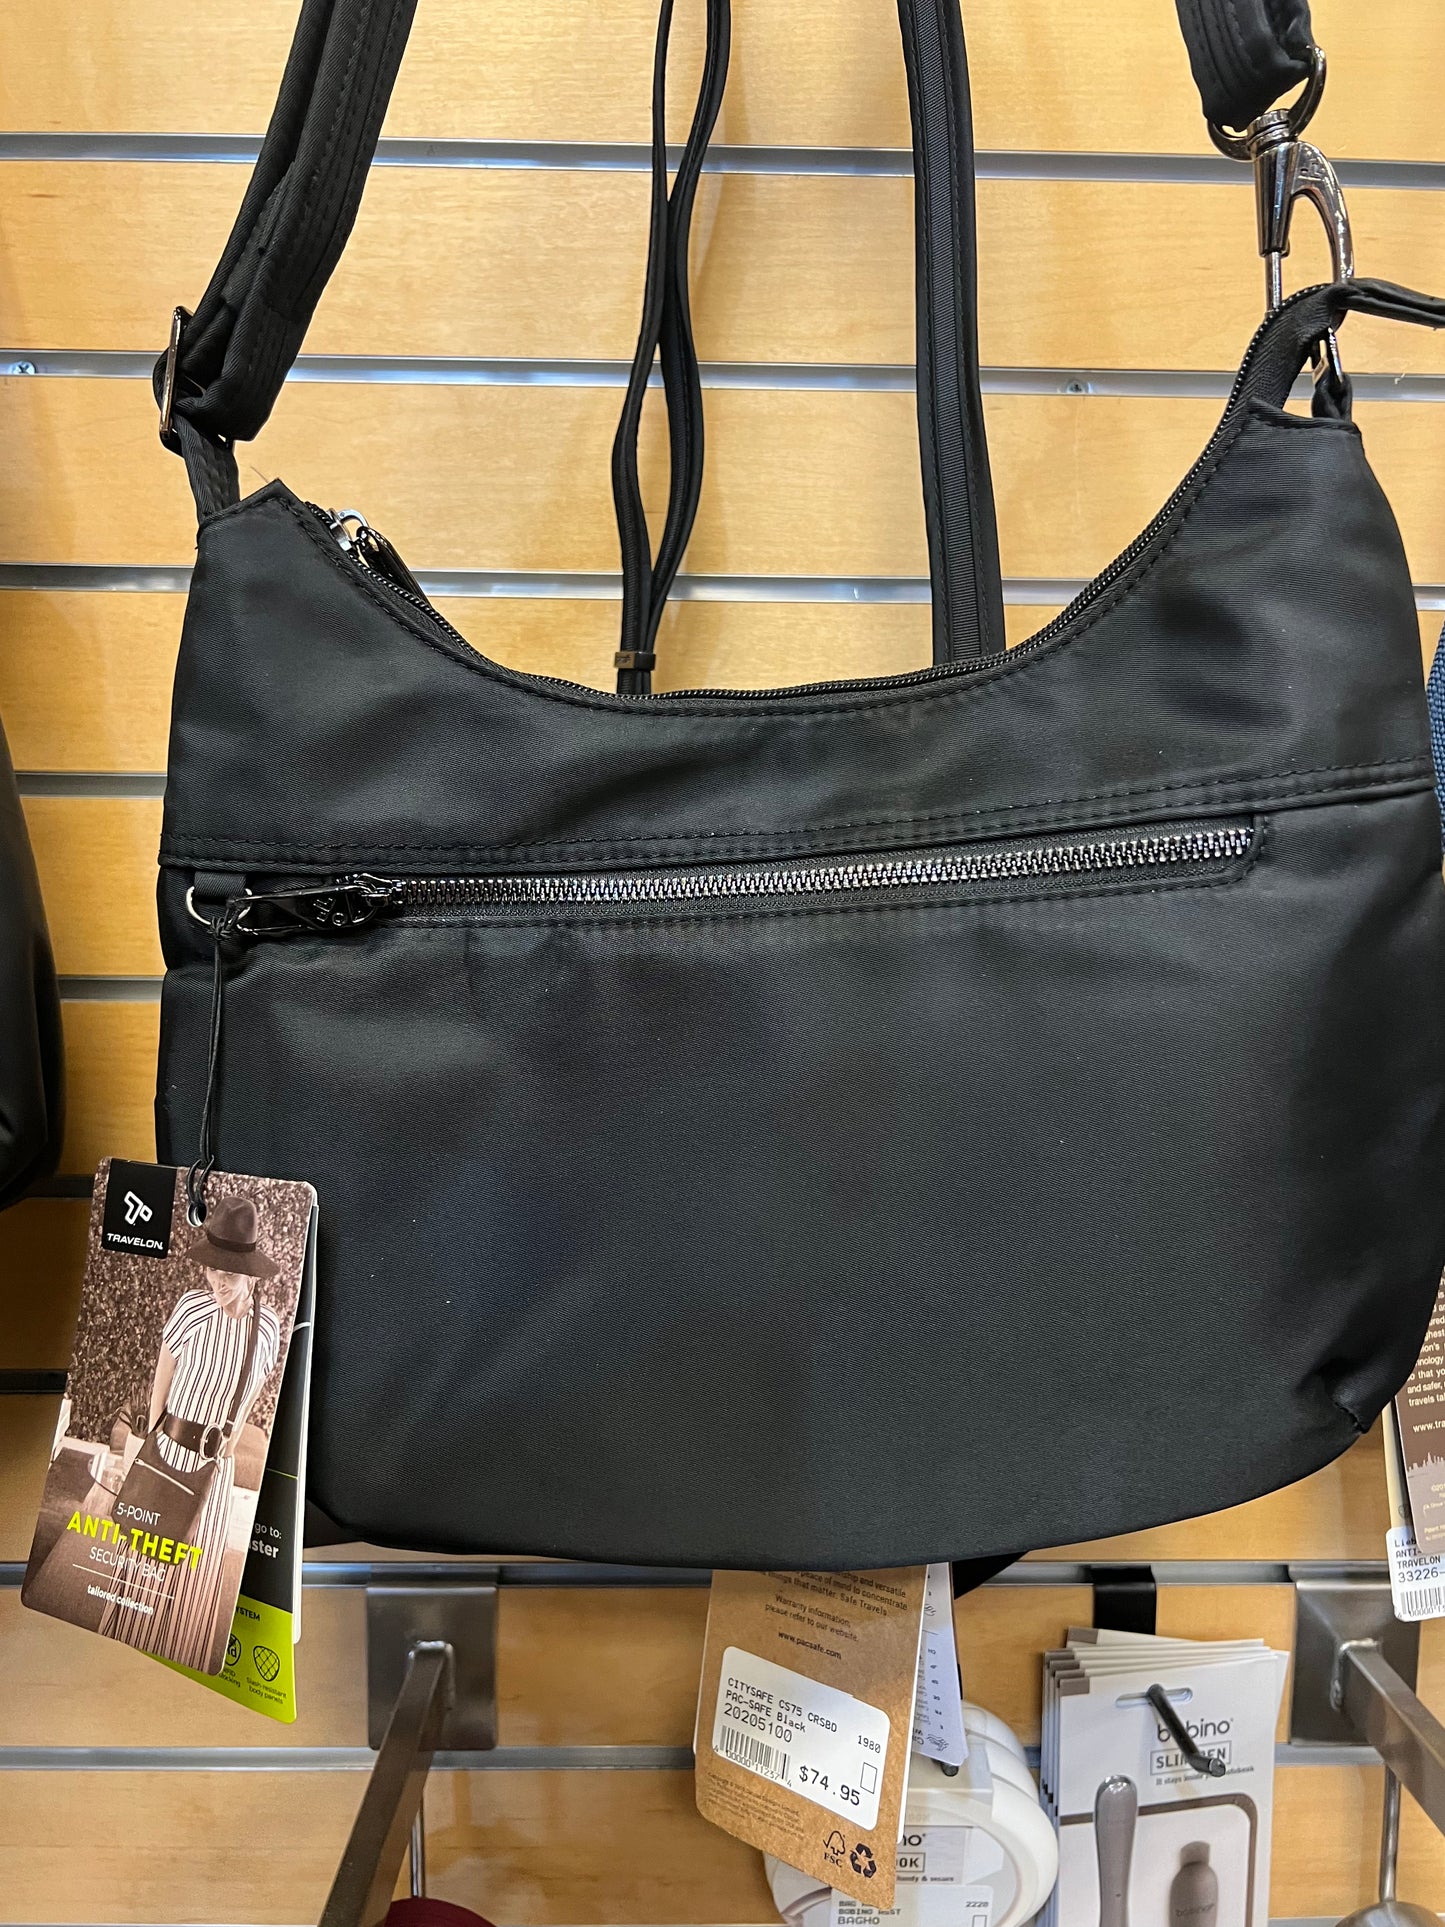 Travelon Anti-Theft Tailored Hobo Handbag/Purse